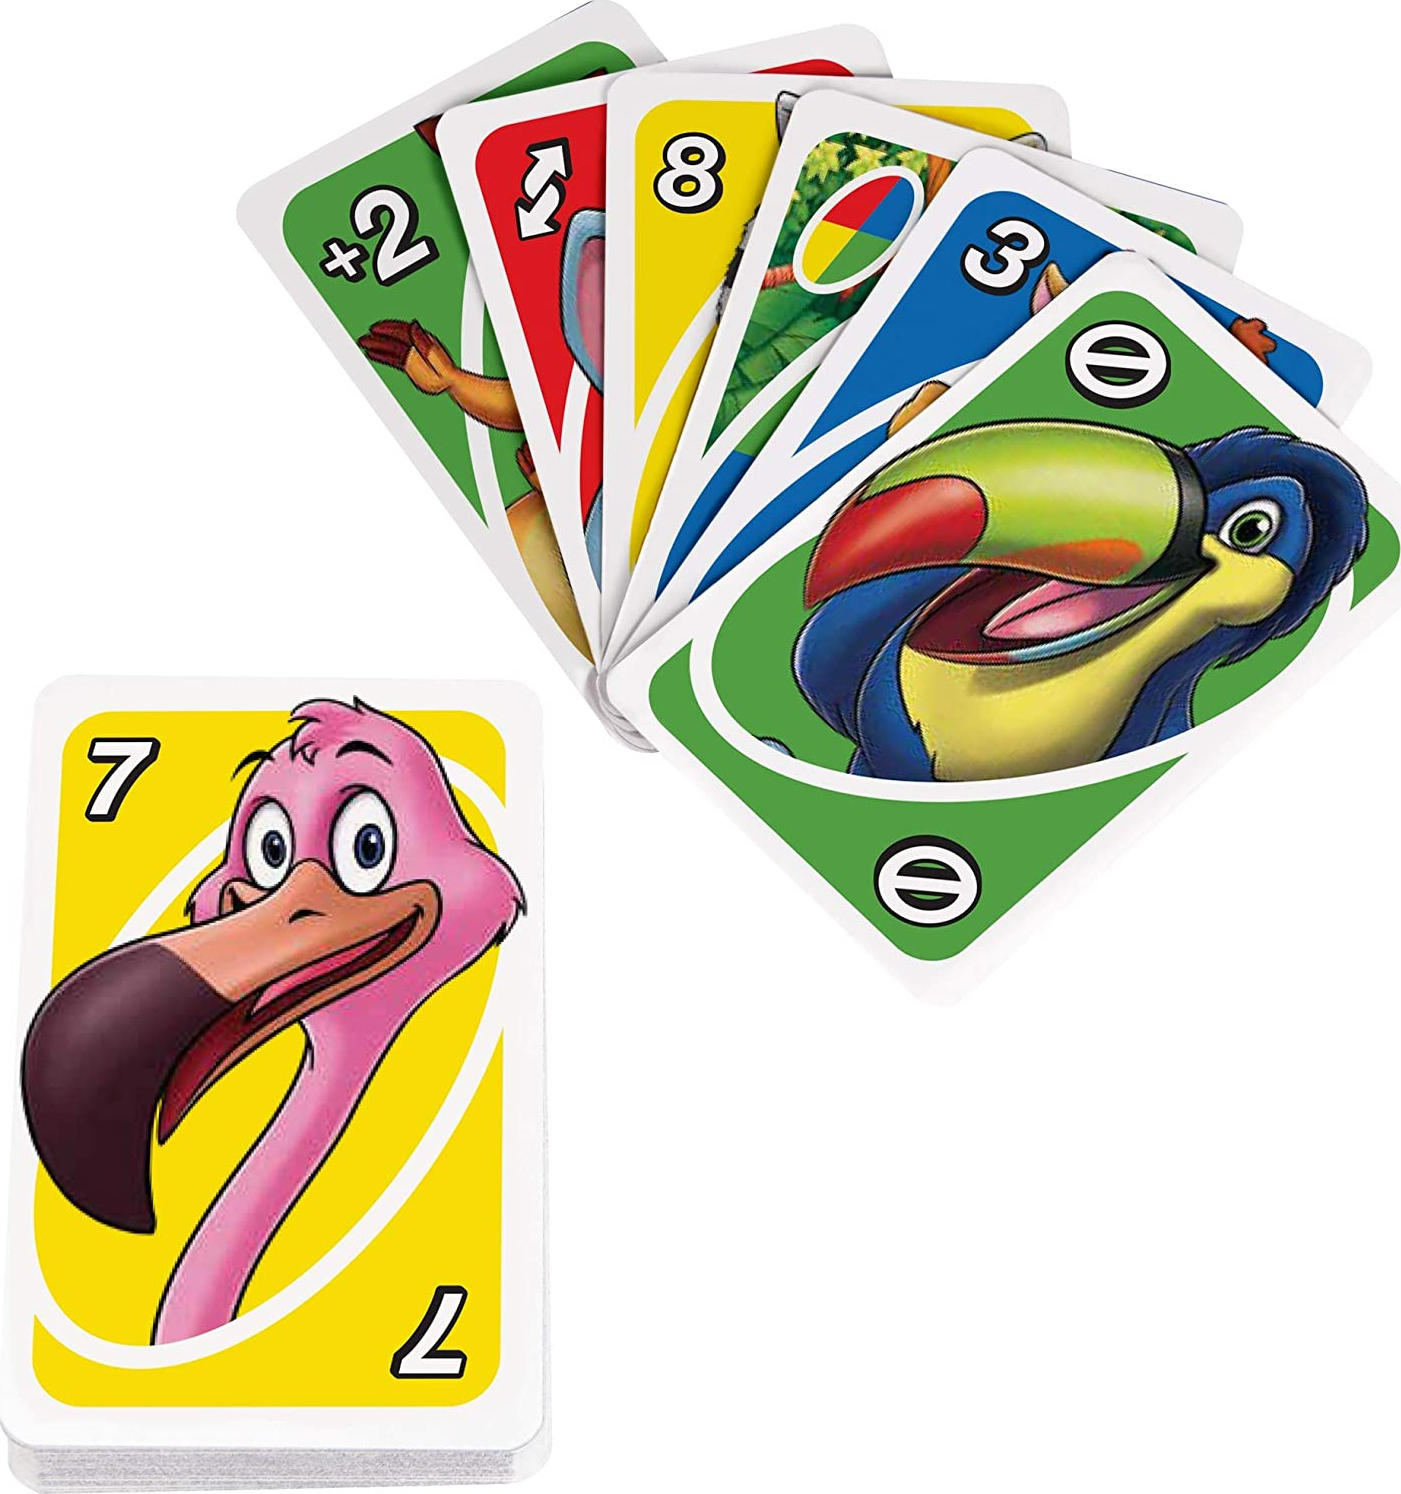 UNO Junior Card Game